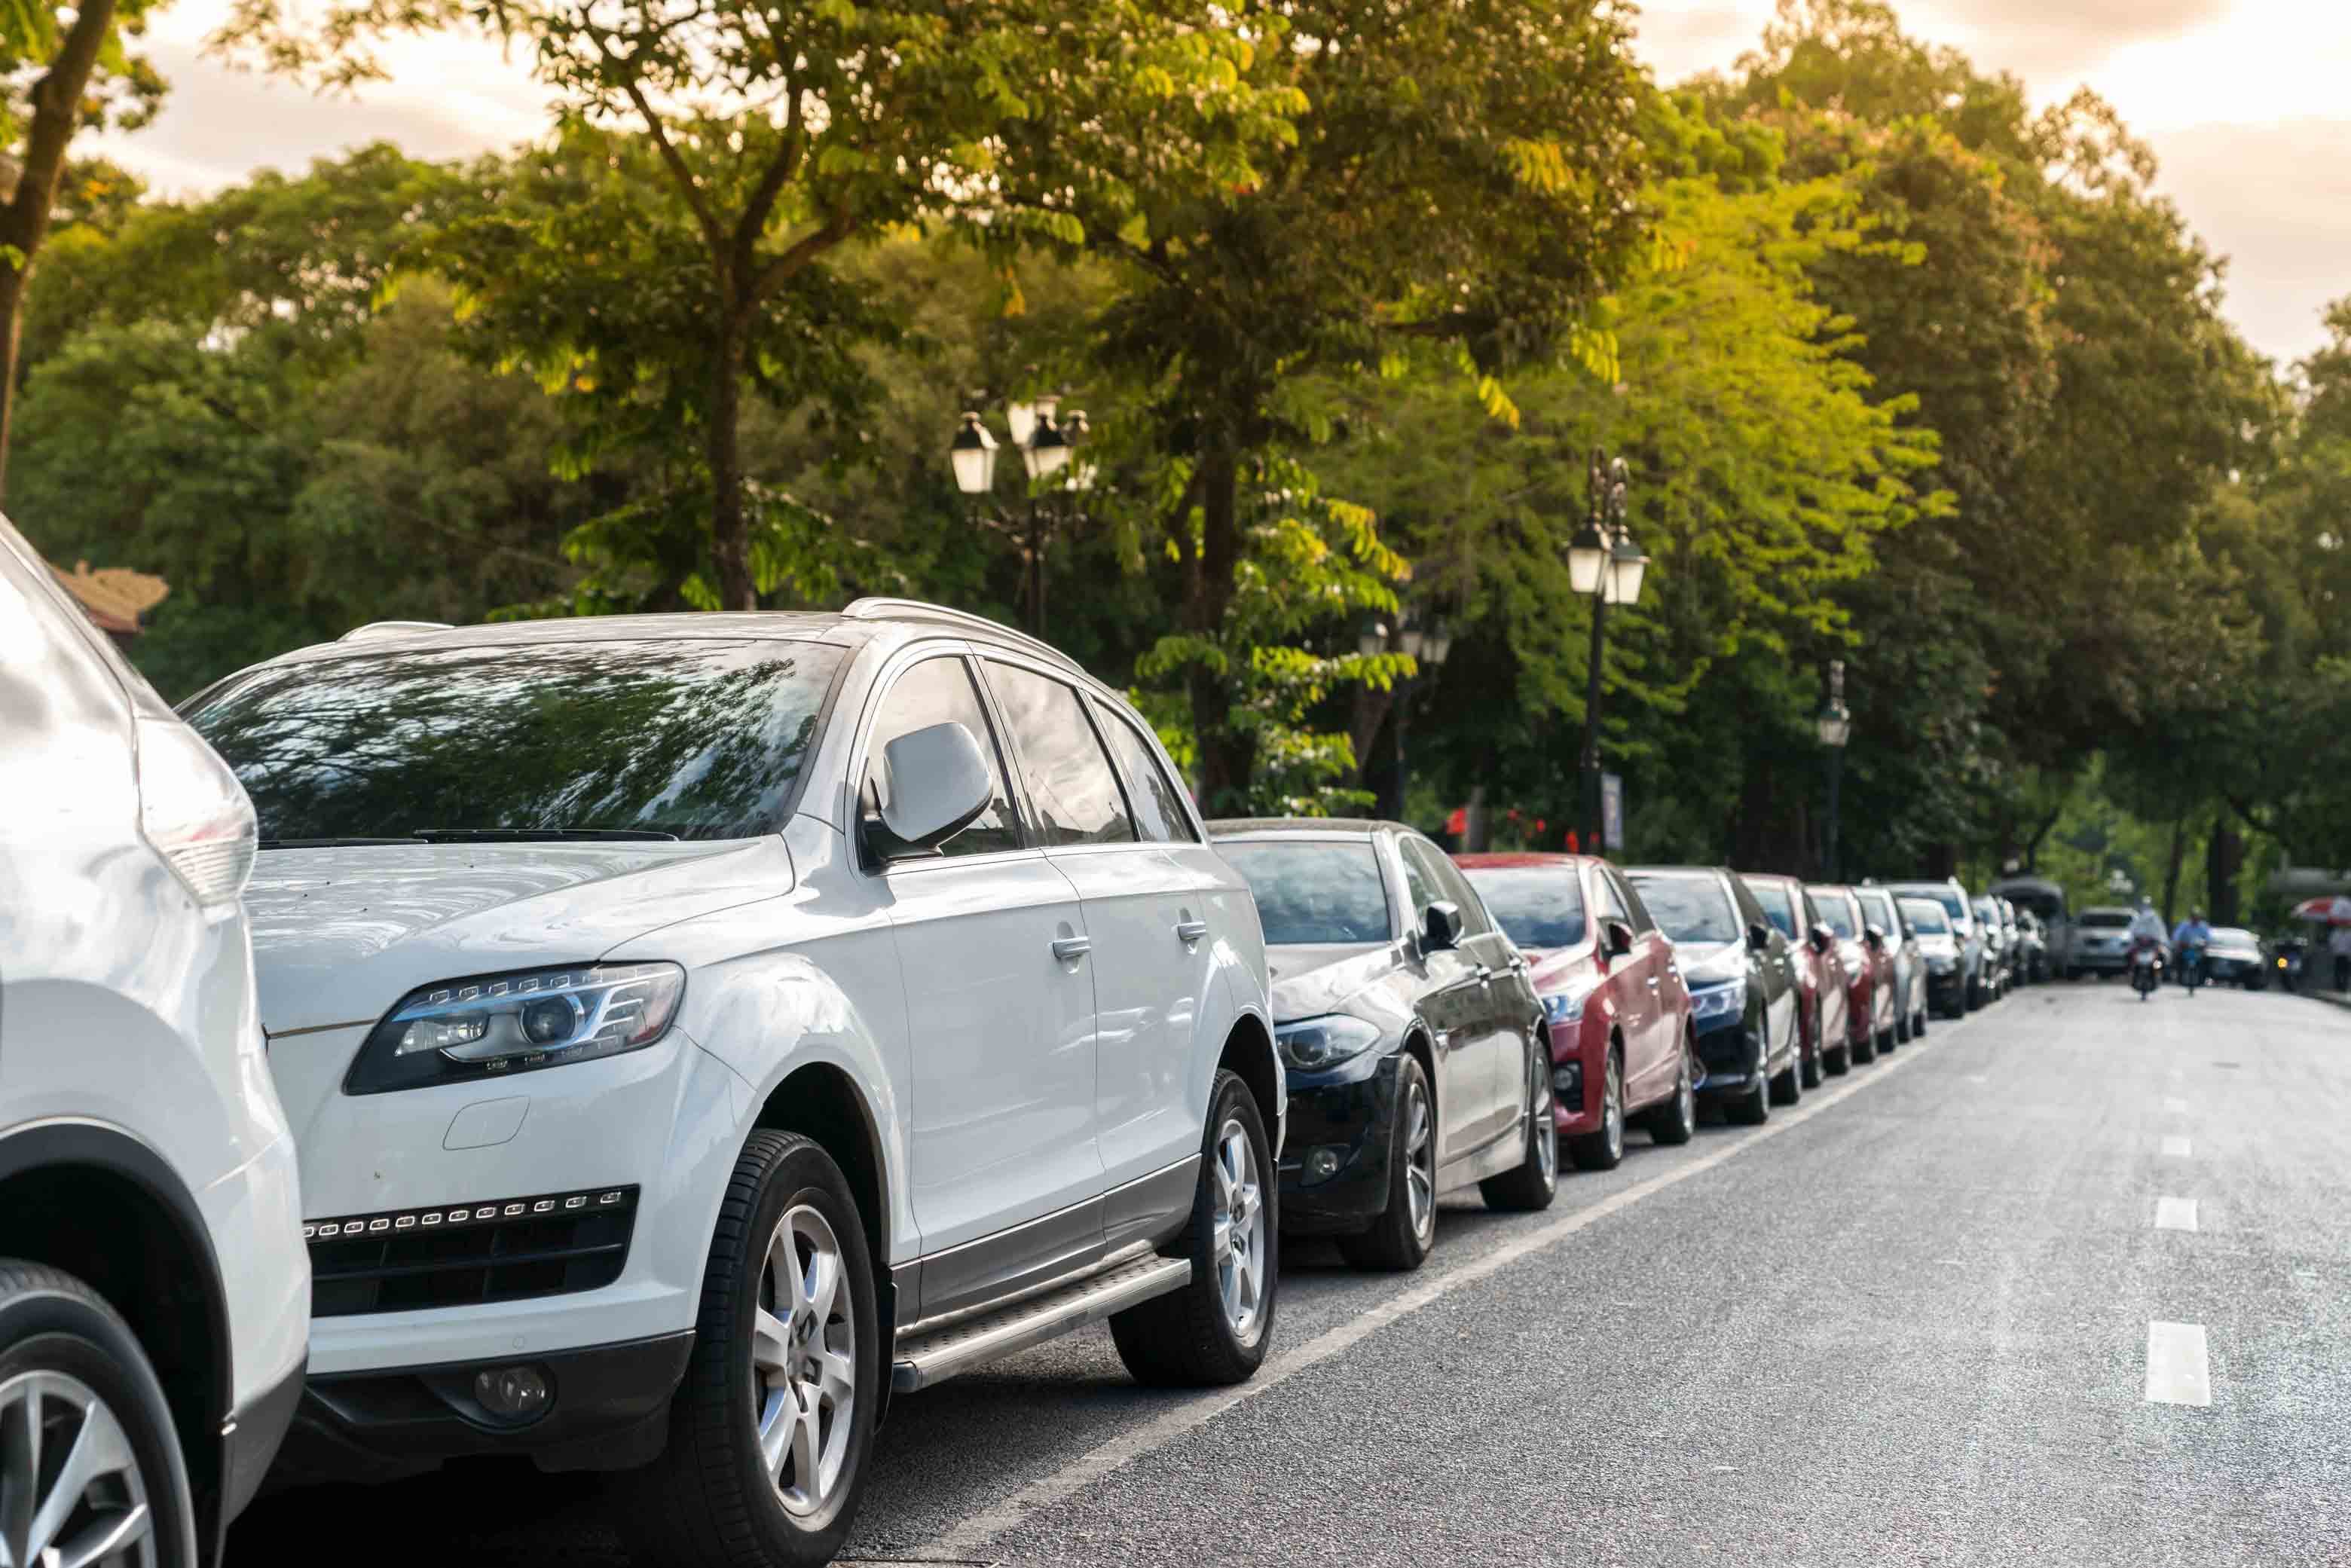 Una fila di macchine parcheggiate lungo una strada alberata in città